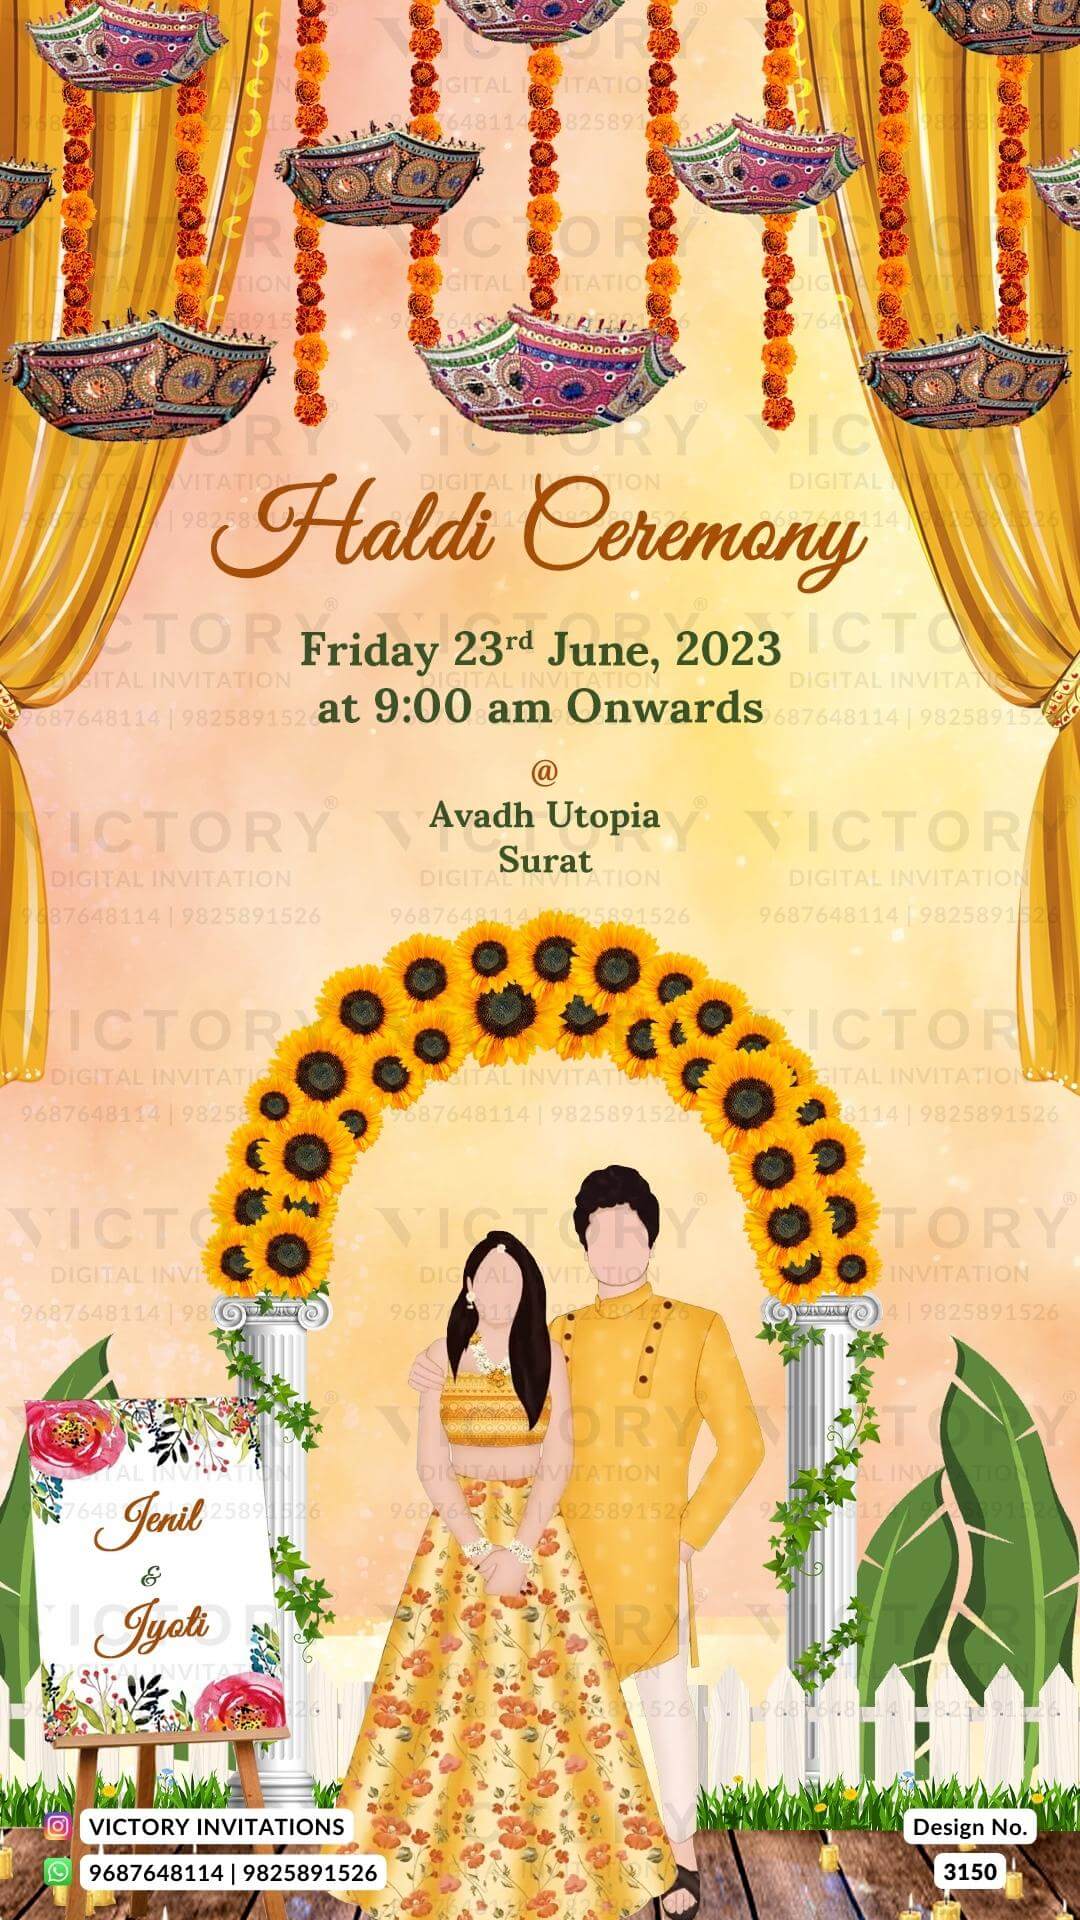 haldi ceremony digital invitation card design number 3150